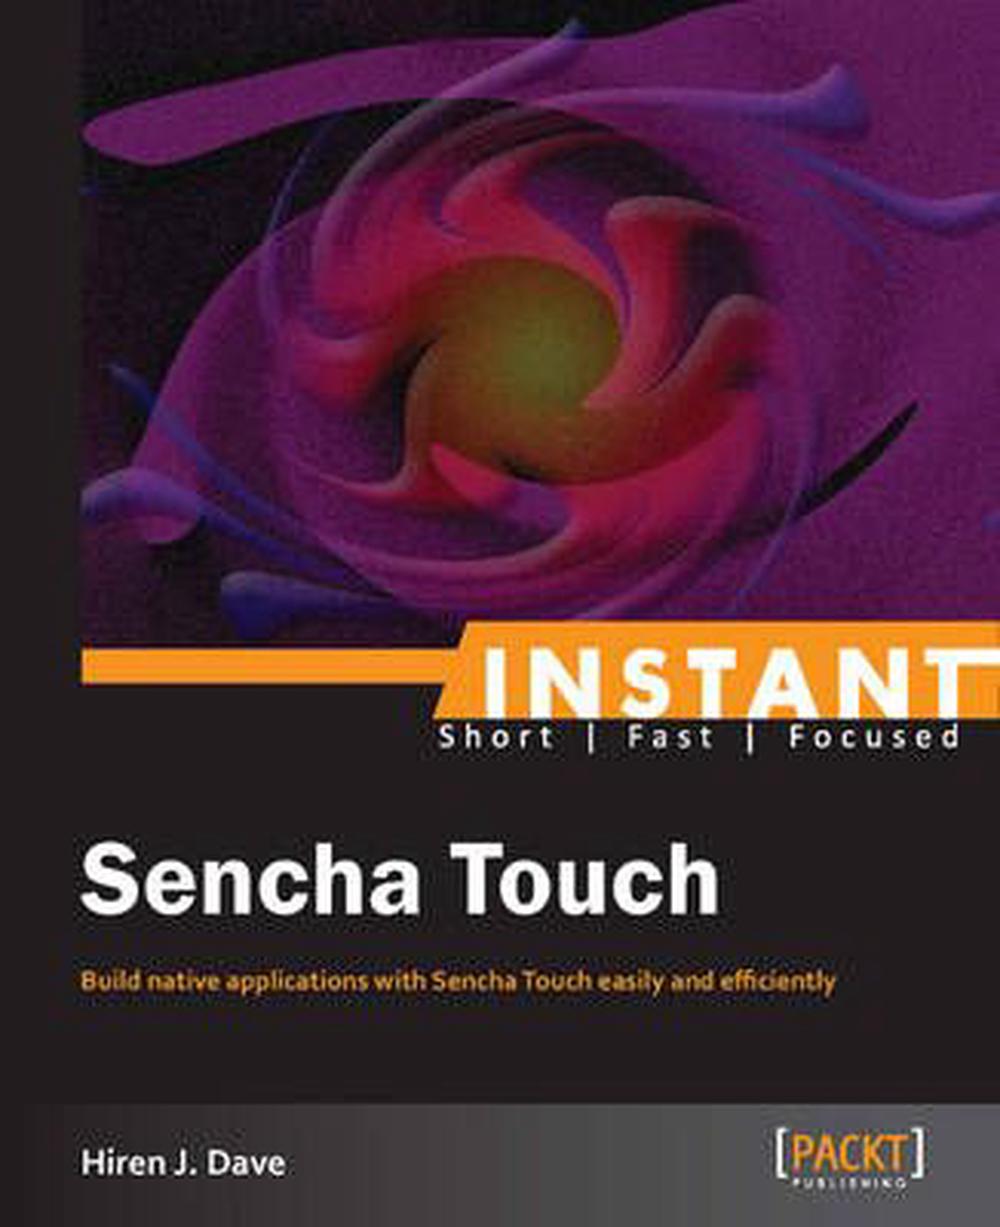 sencha touch documentation bounces off